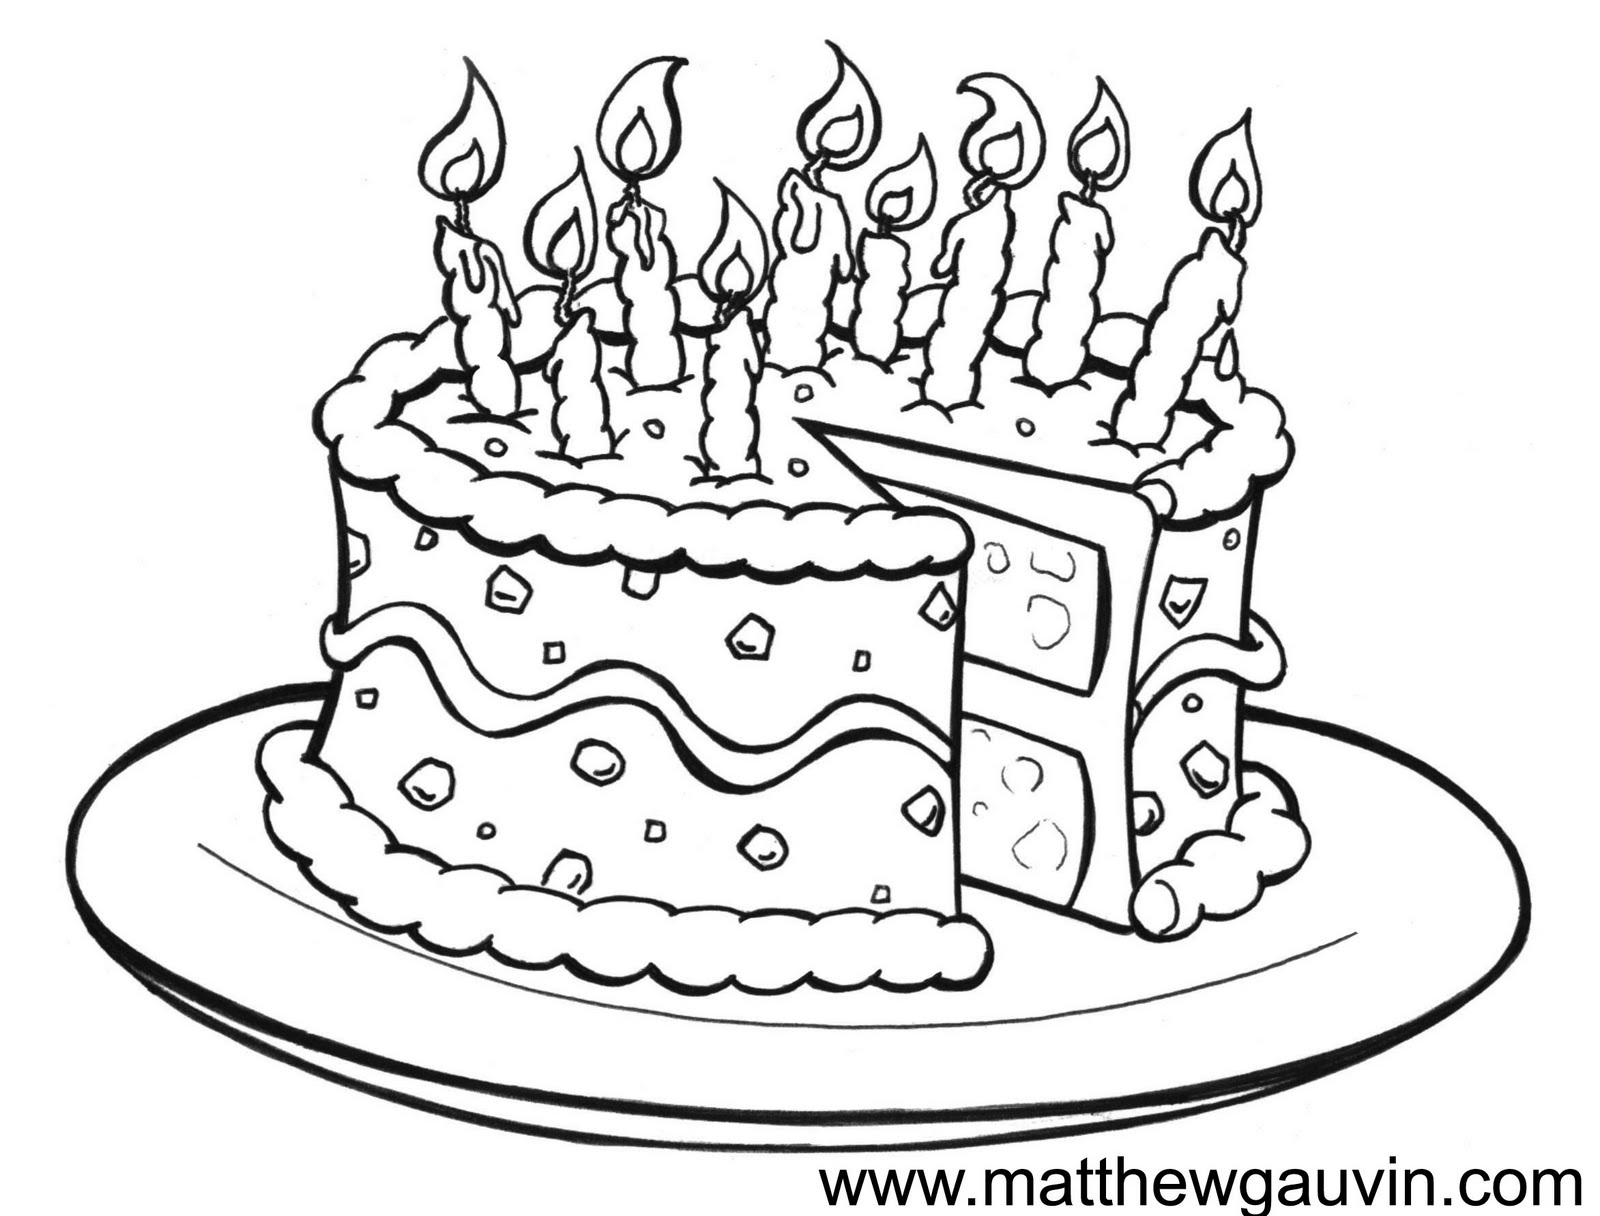 MG Children's Book Illustrations: Birthday cake Line Drawing